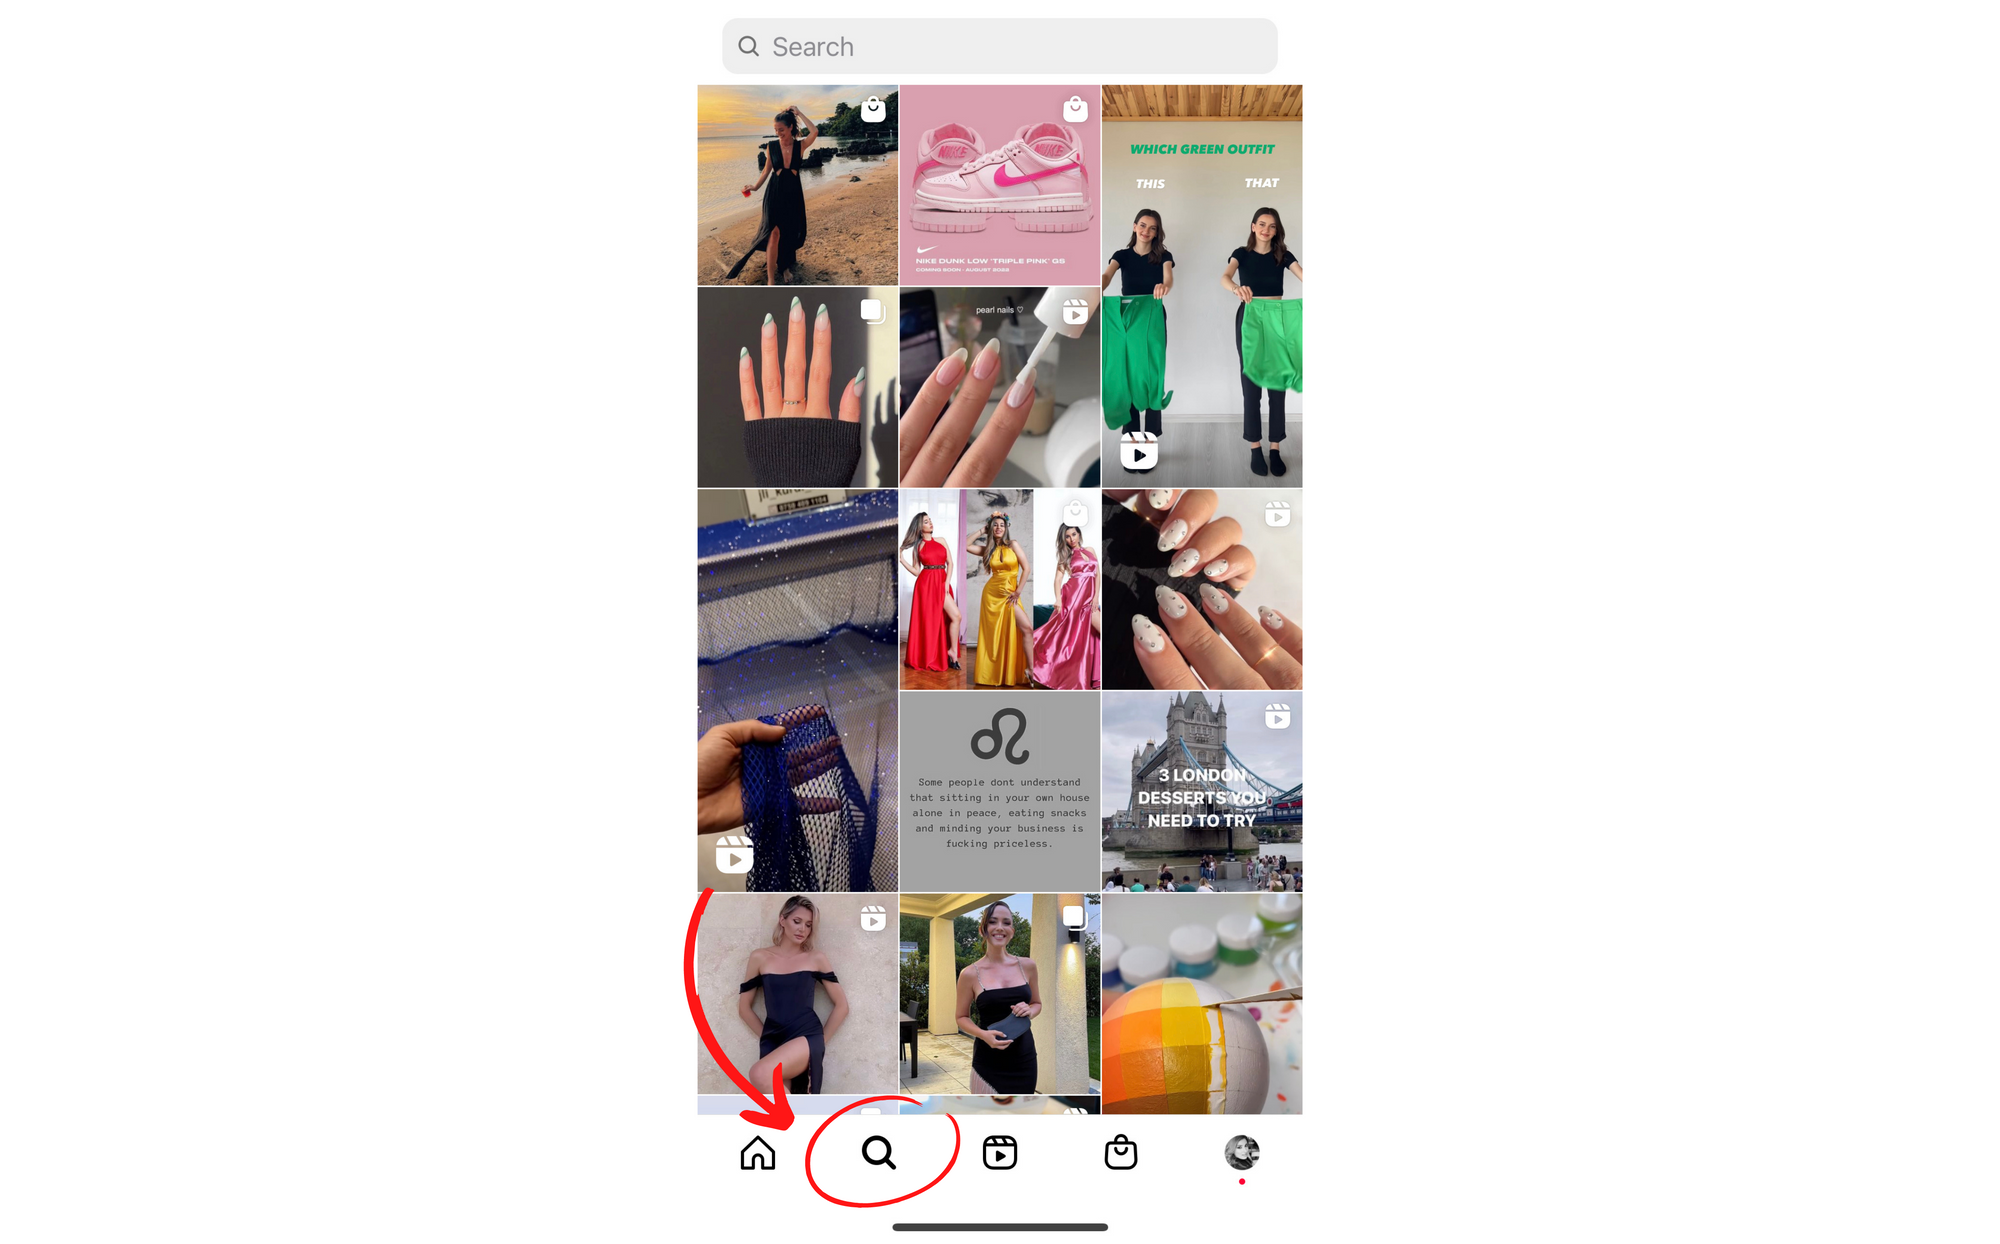 instagram explore page